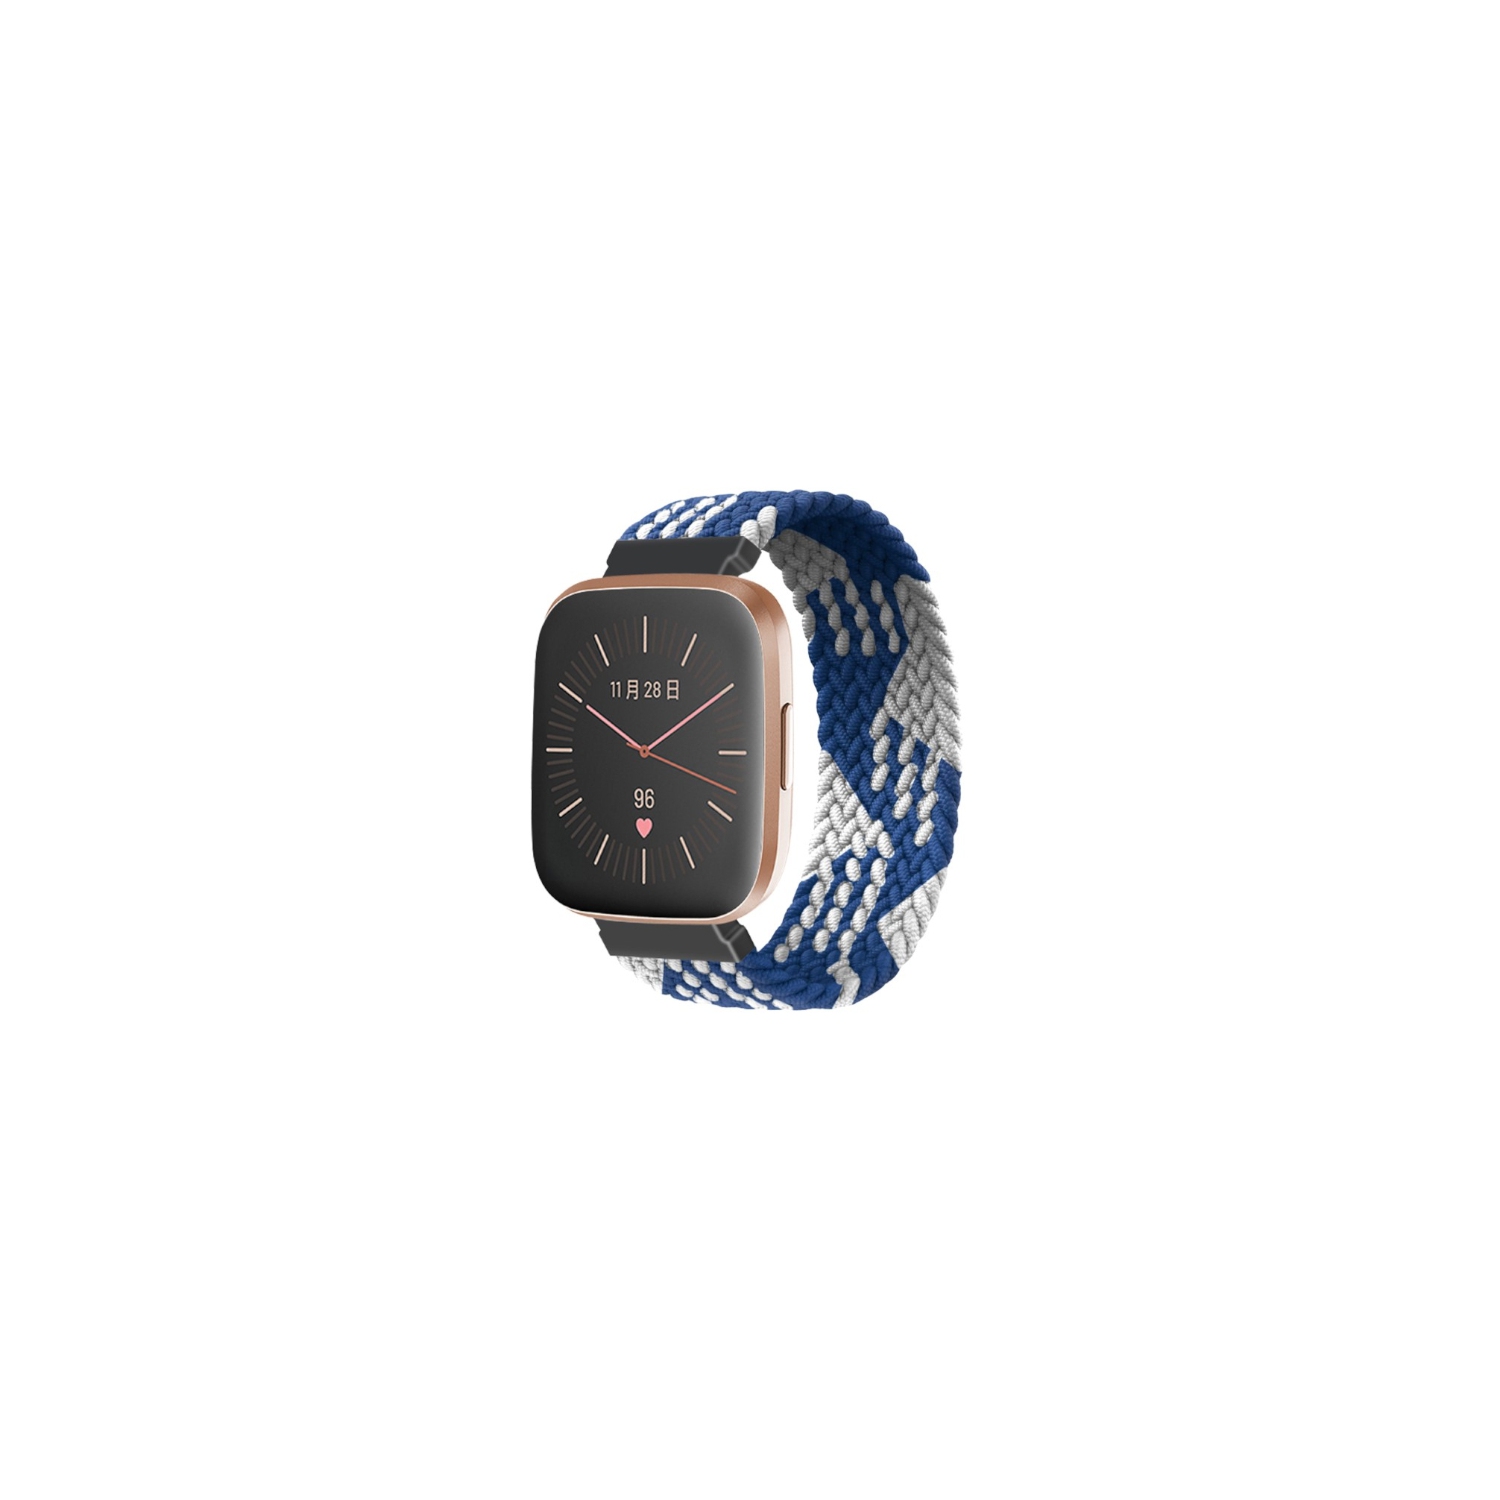 StrapsCo Patterned Elastic Nylon Watch Band Strap for Fitbit Versa & Versa 2 - L - Fits 6.6" - 6.9" Wrist - Blue & White Buffalo